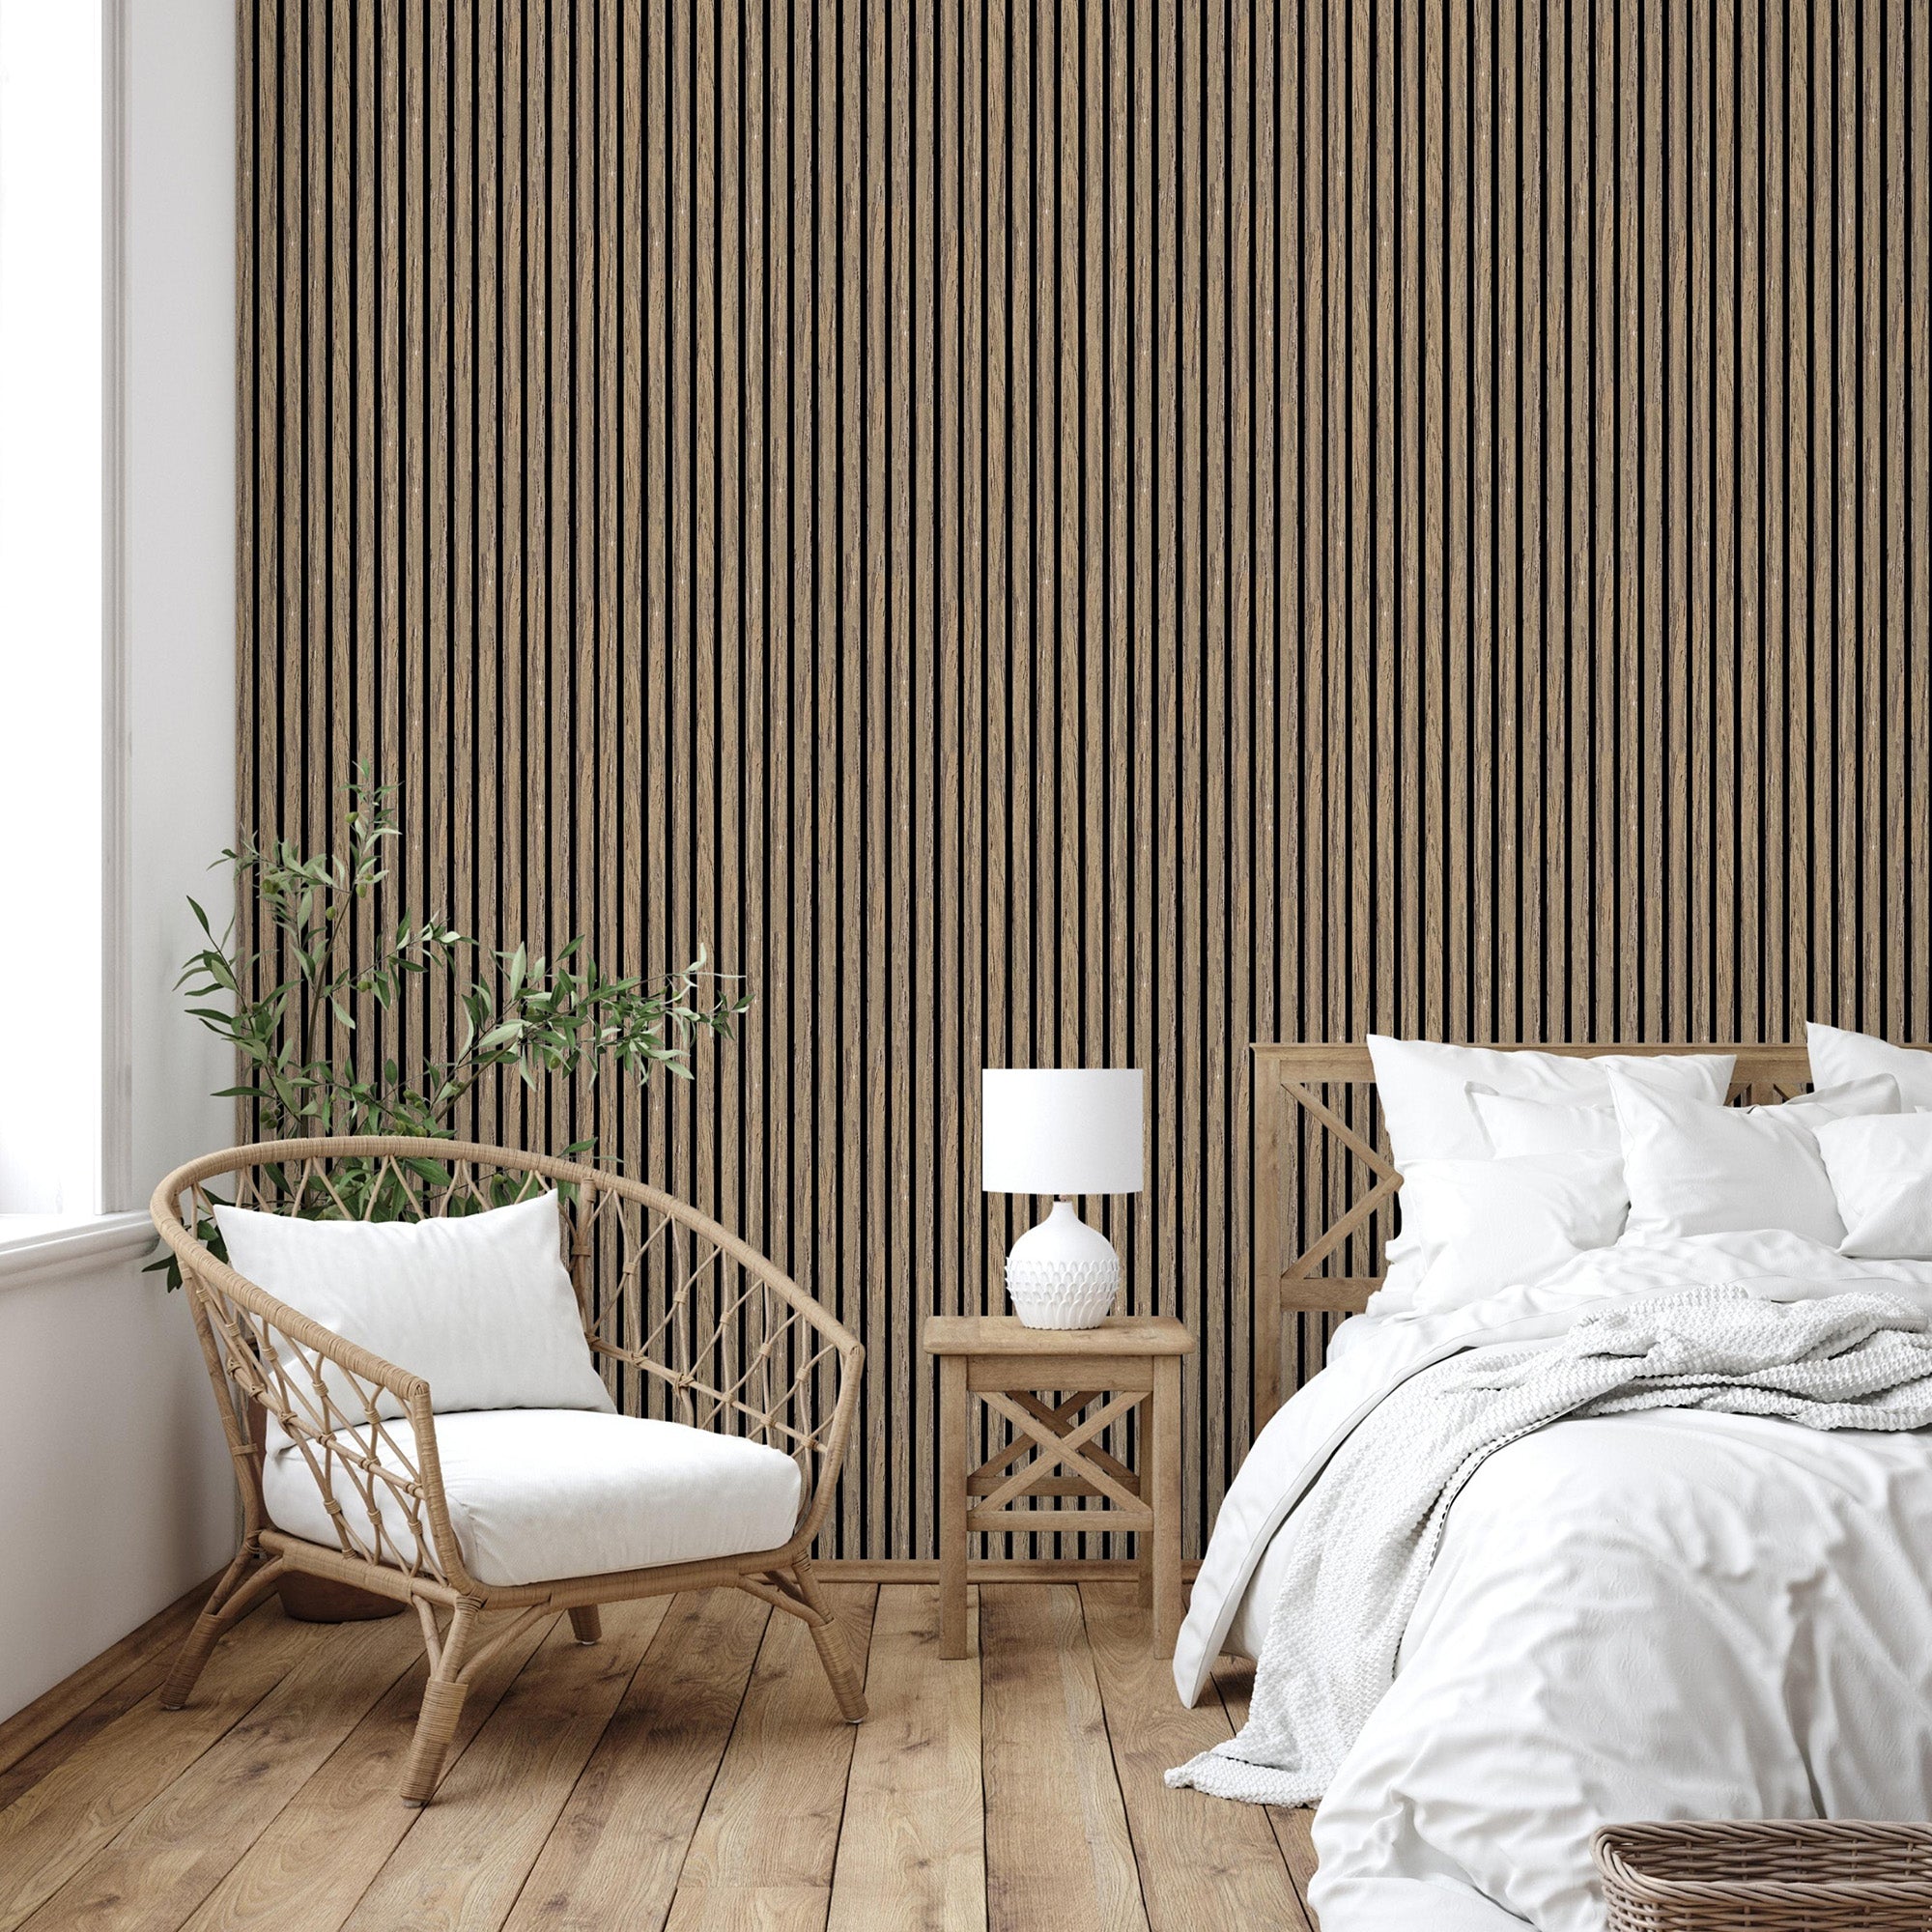 Bamboo Acoustic Wood Wall Panels